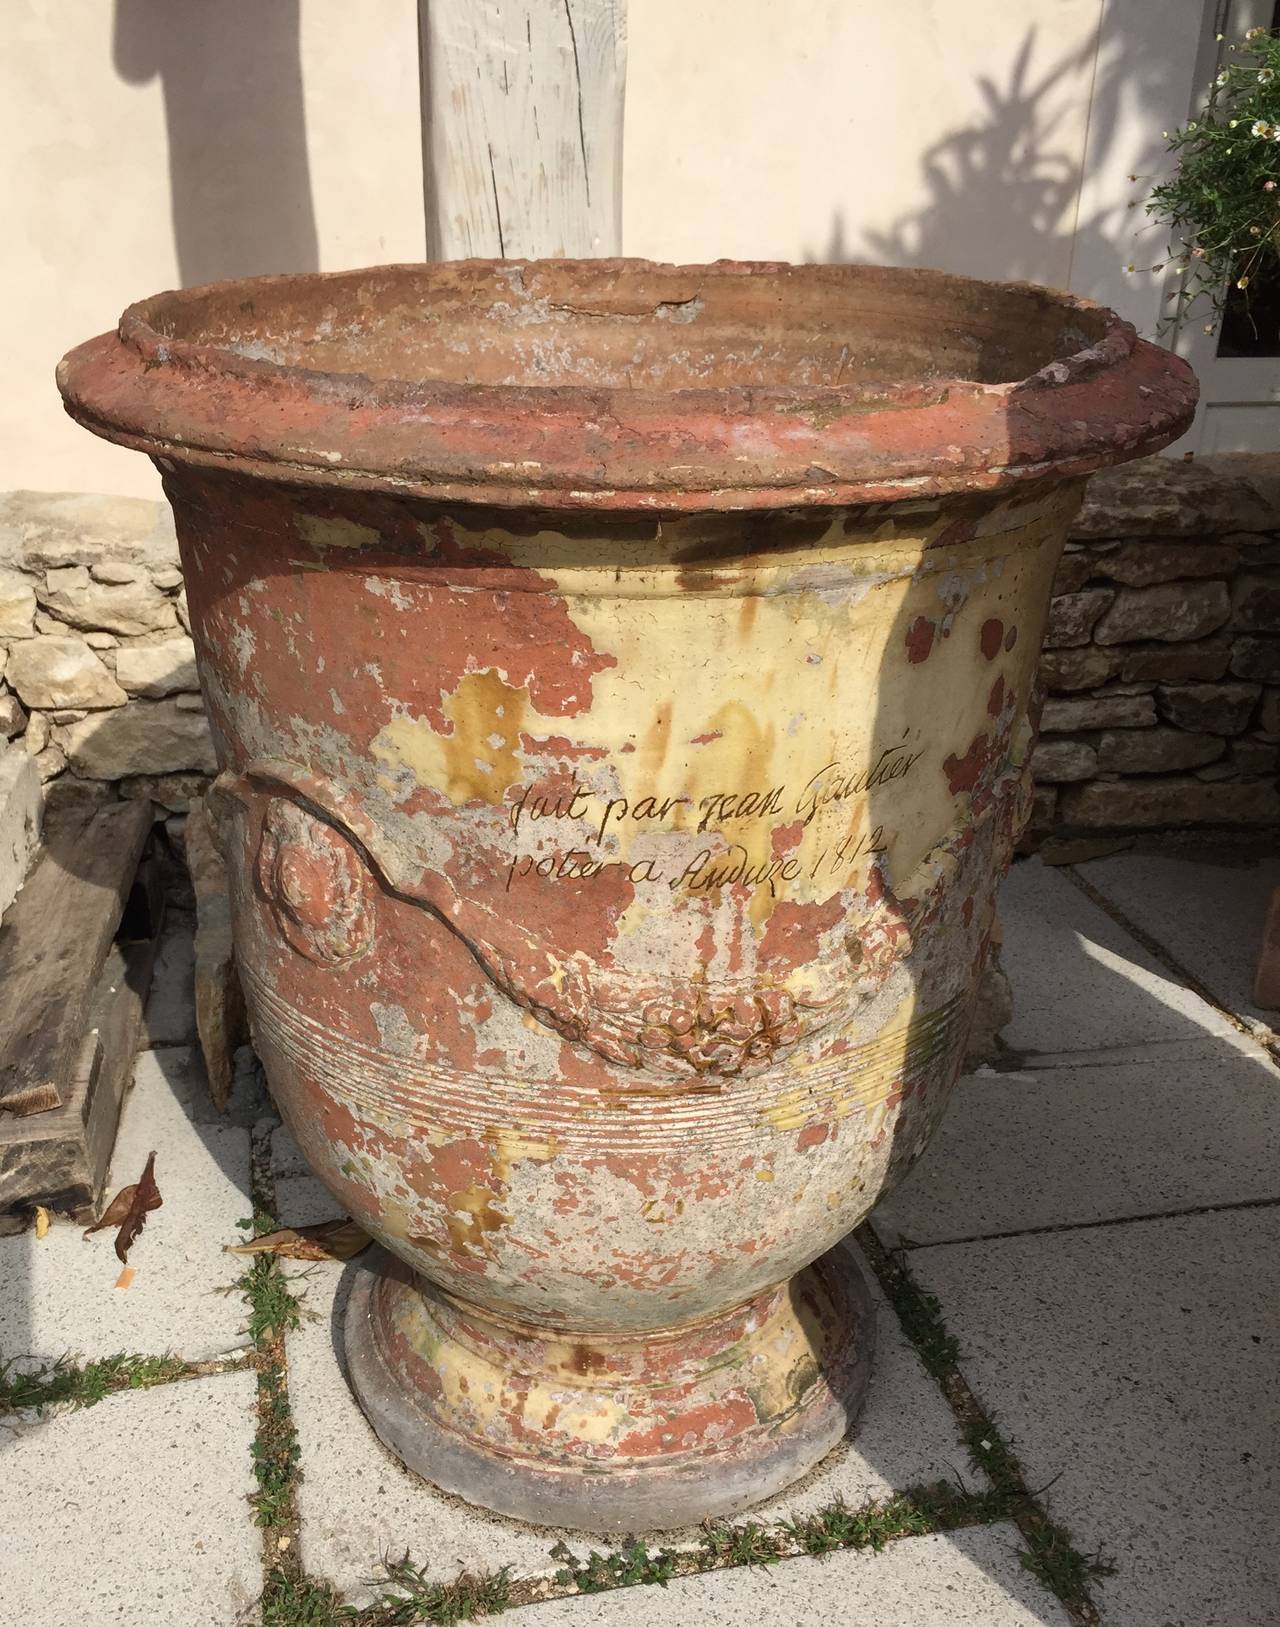 Superb Anduze vase yellow glazed terracotta.
Bears the inscription: 